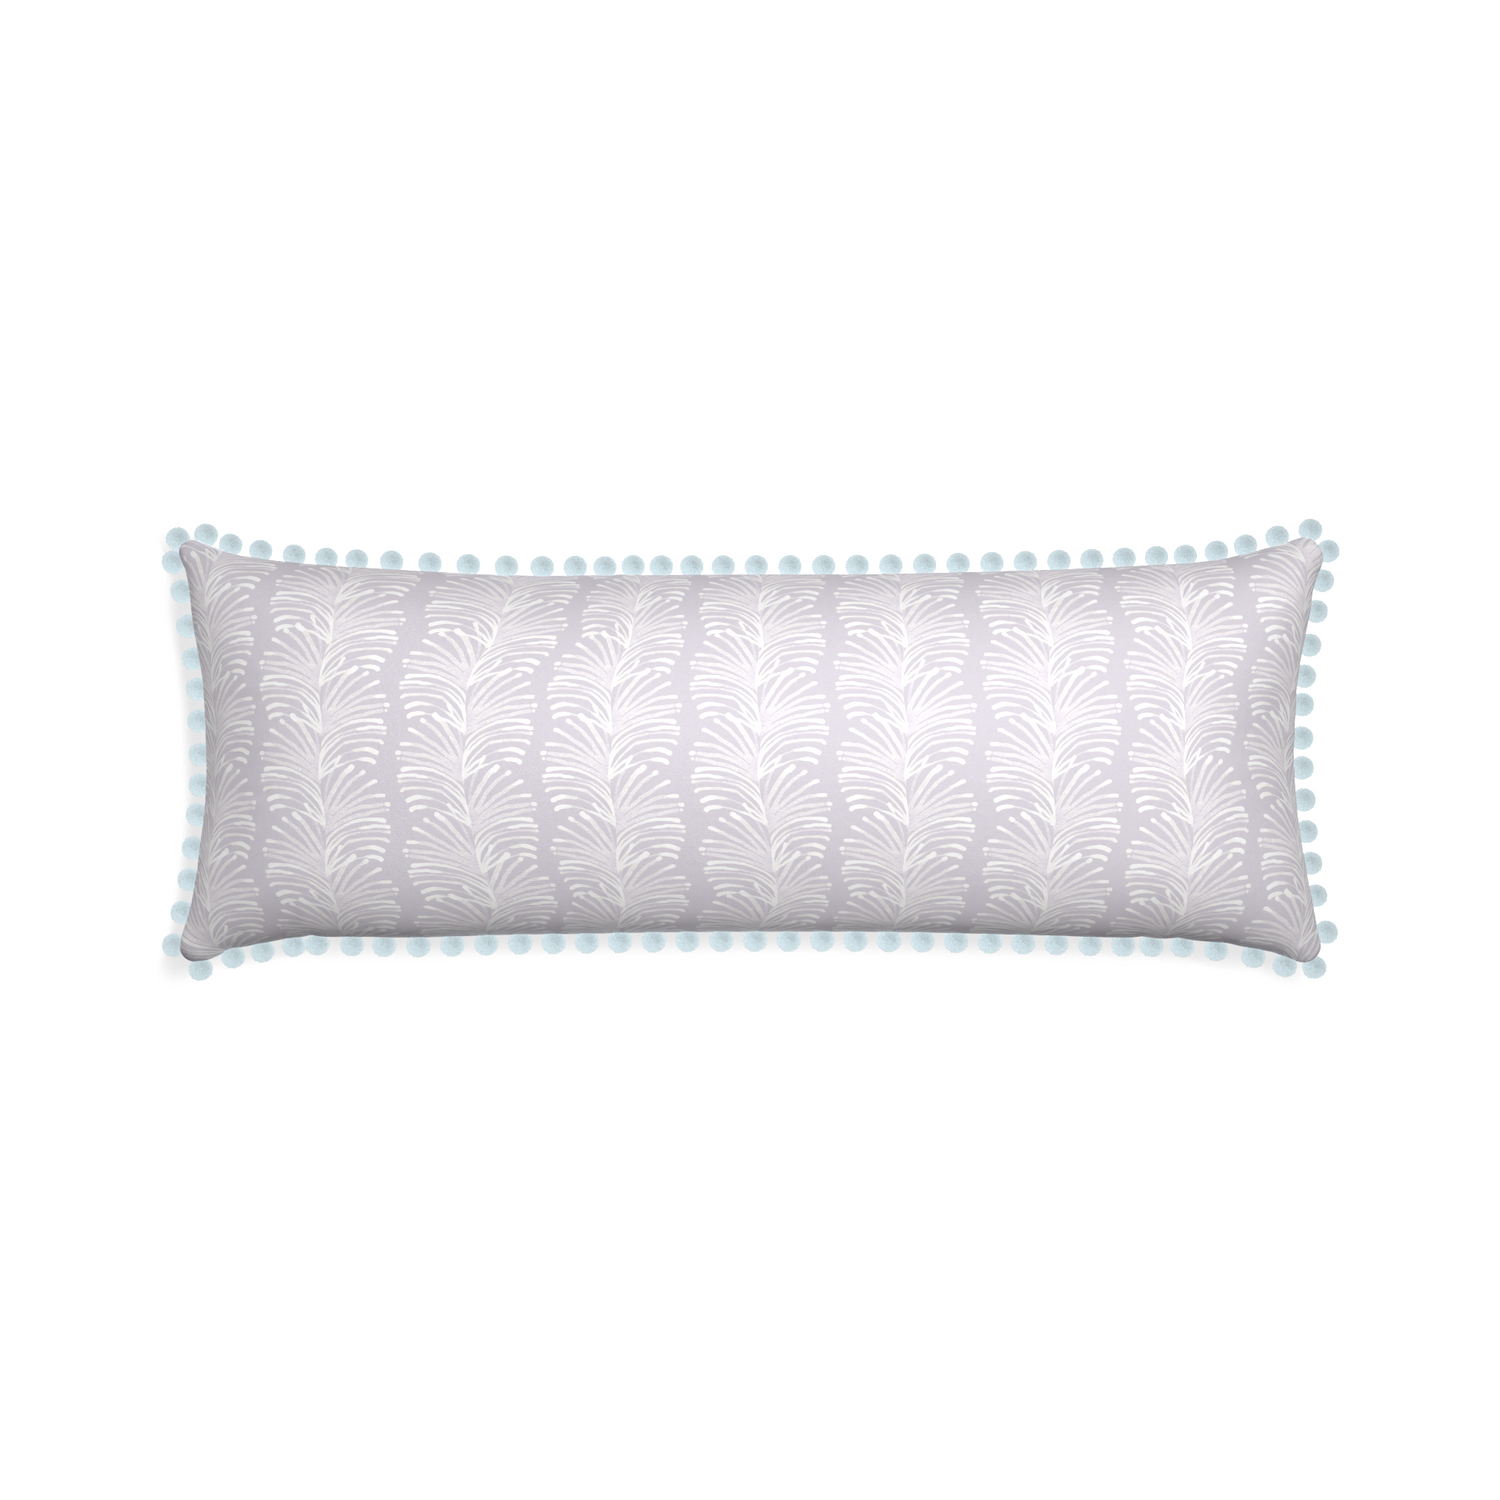 Xl-lumbar emma lavender custom pillow with powder pom pom on white background